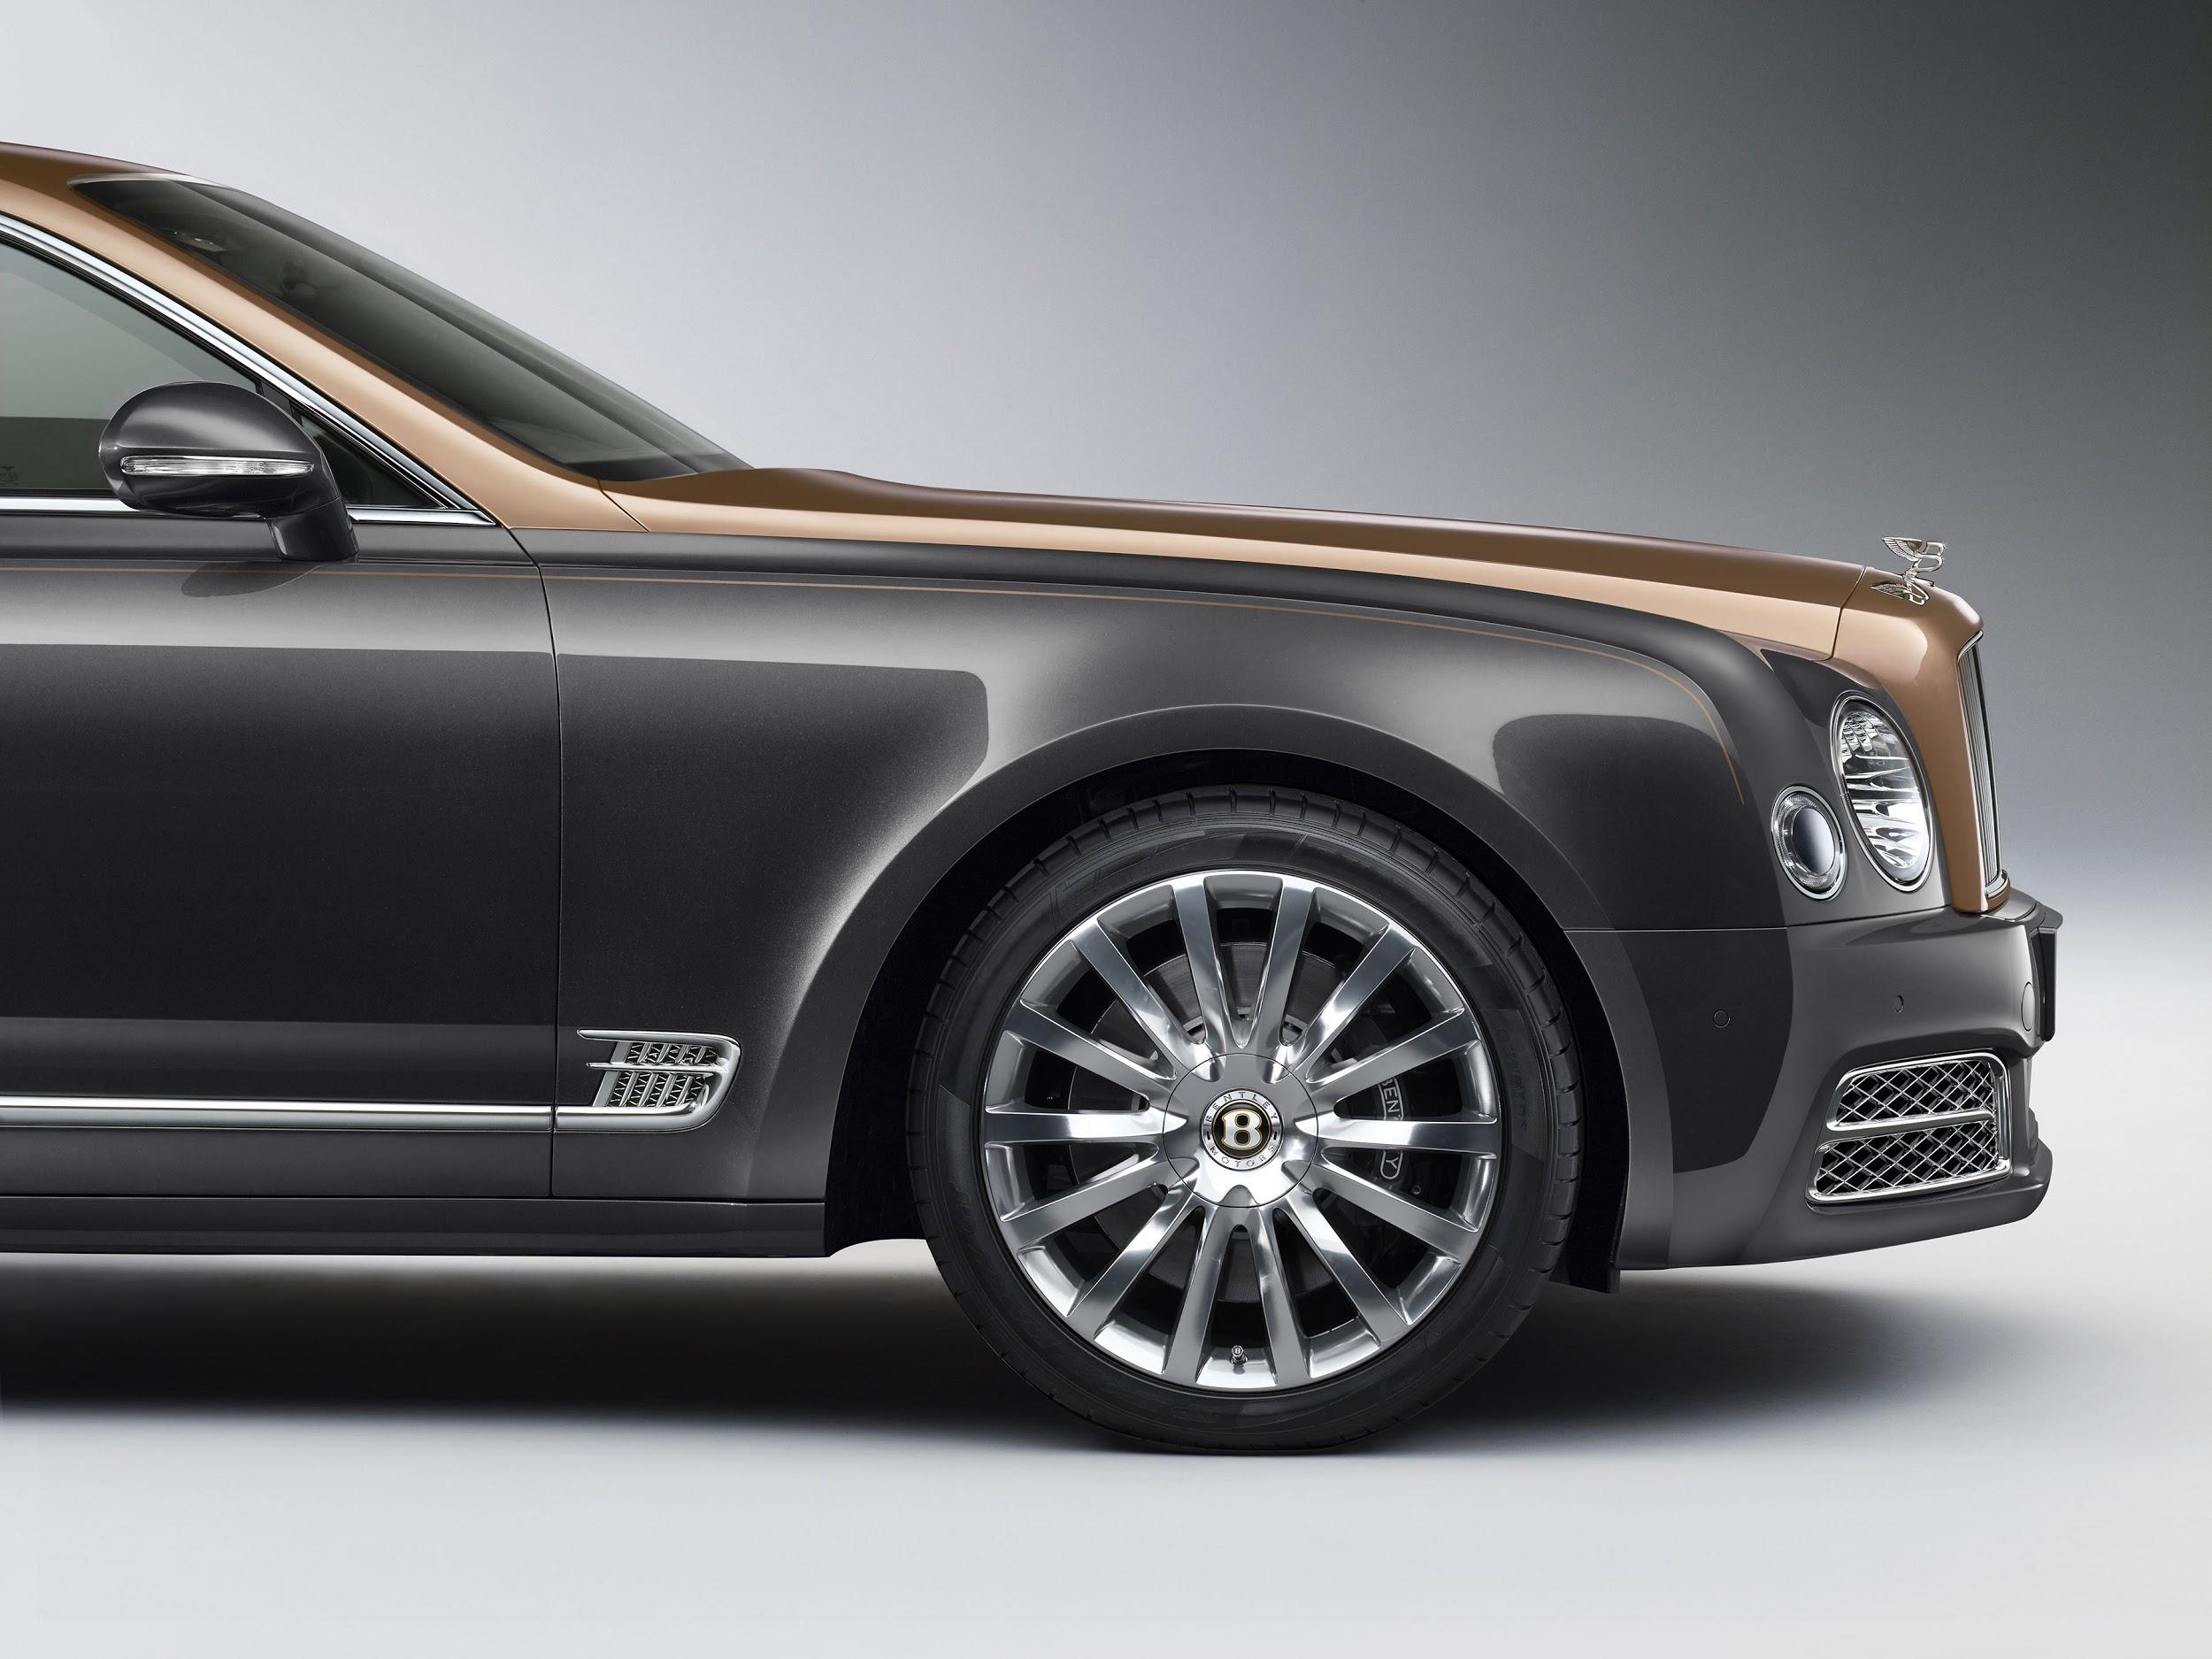 Bentley ‘Centenary Specification’ model